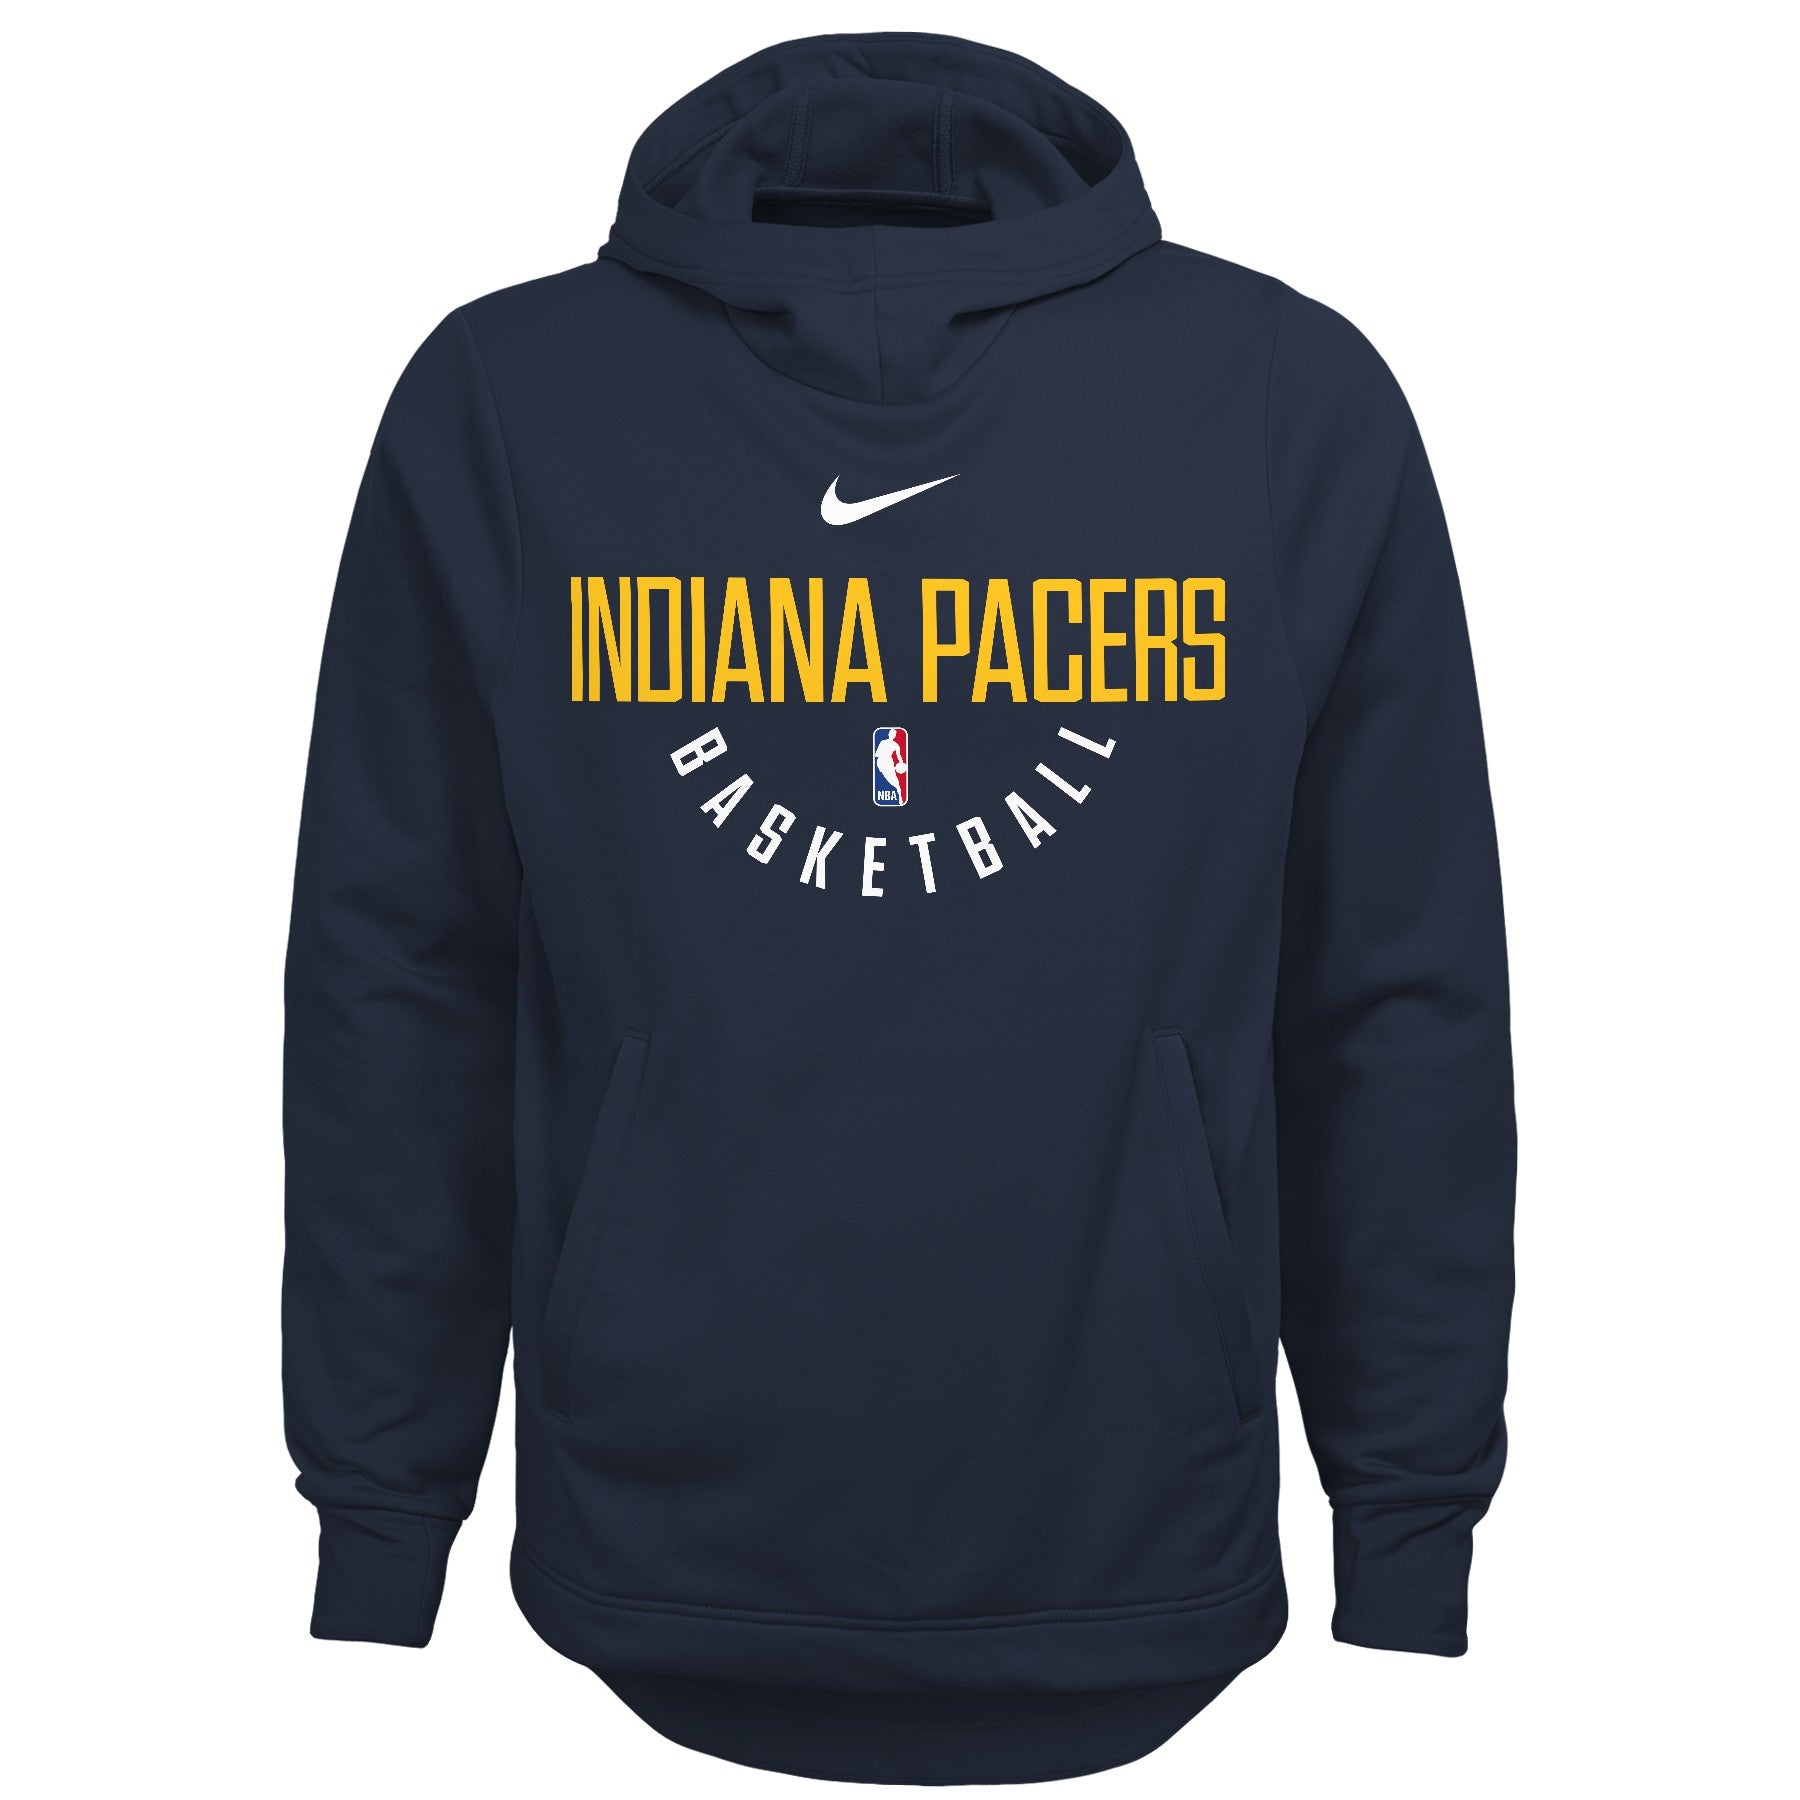 Indiana Pacers Nike Youth Elite Practice Performance Hoodie - Navy